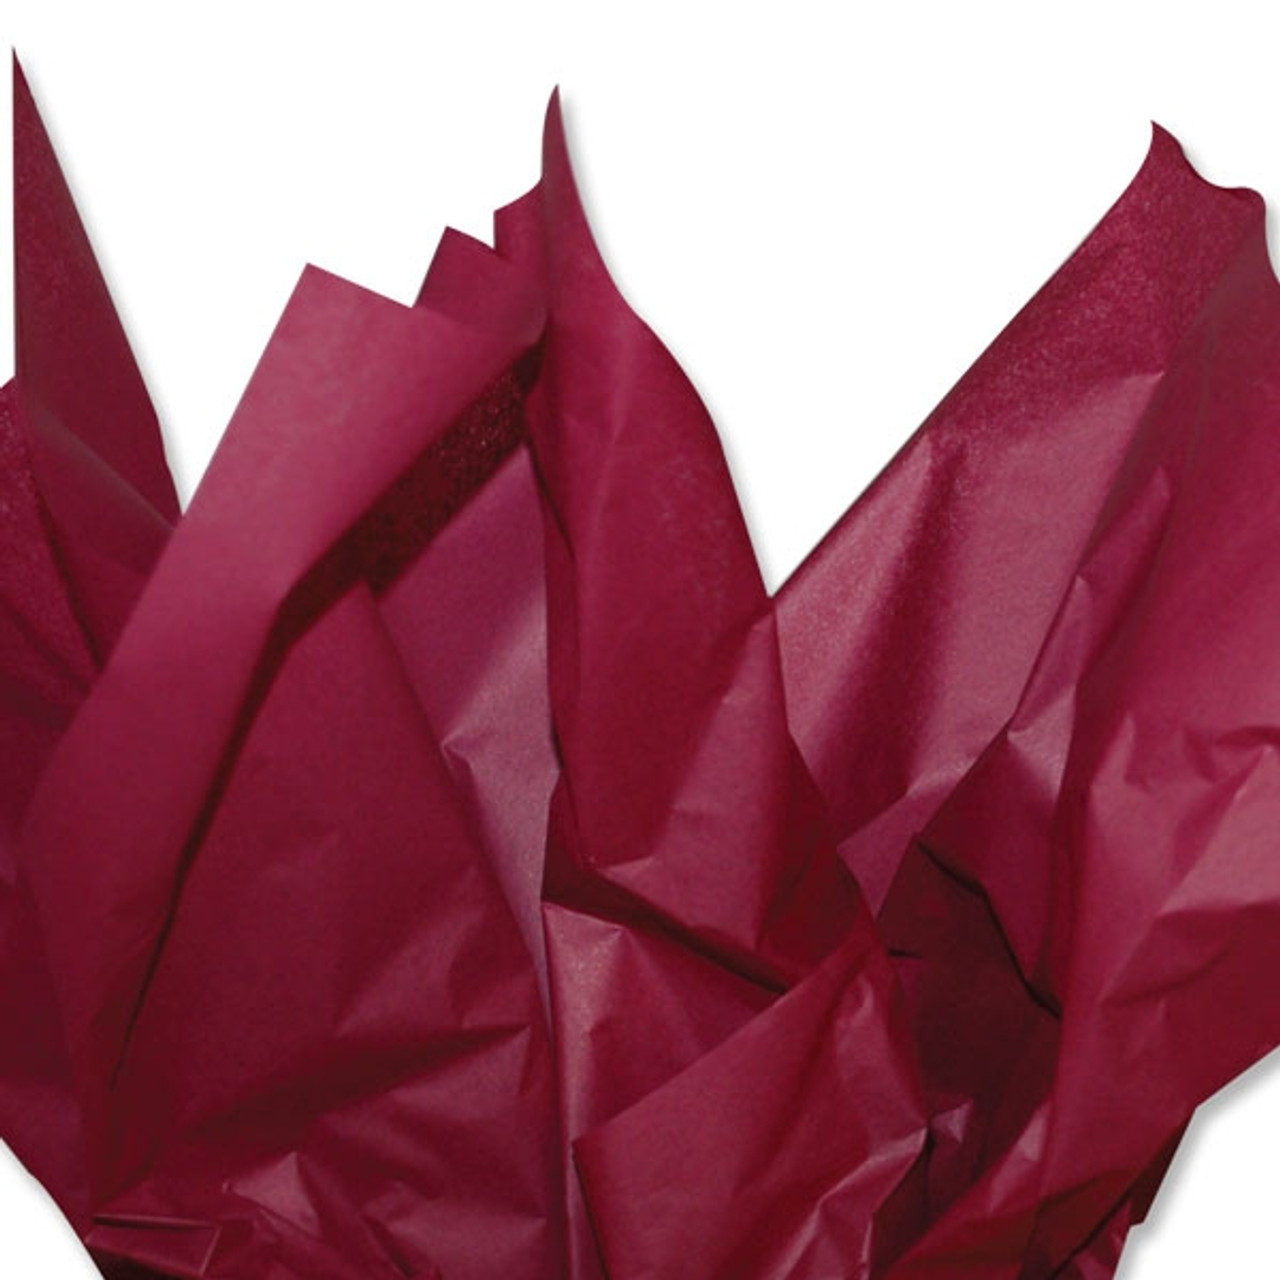 Colored Tissue Paper - Burgundy - NE-165-480 Sheets per Ream